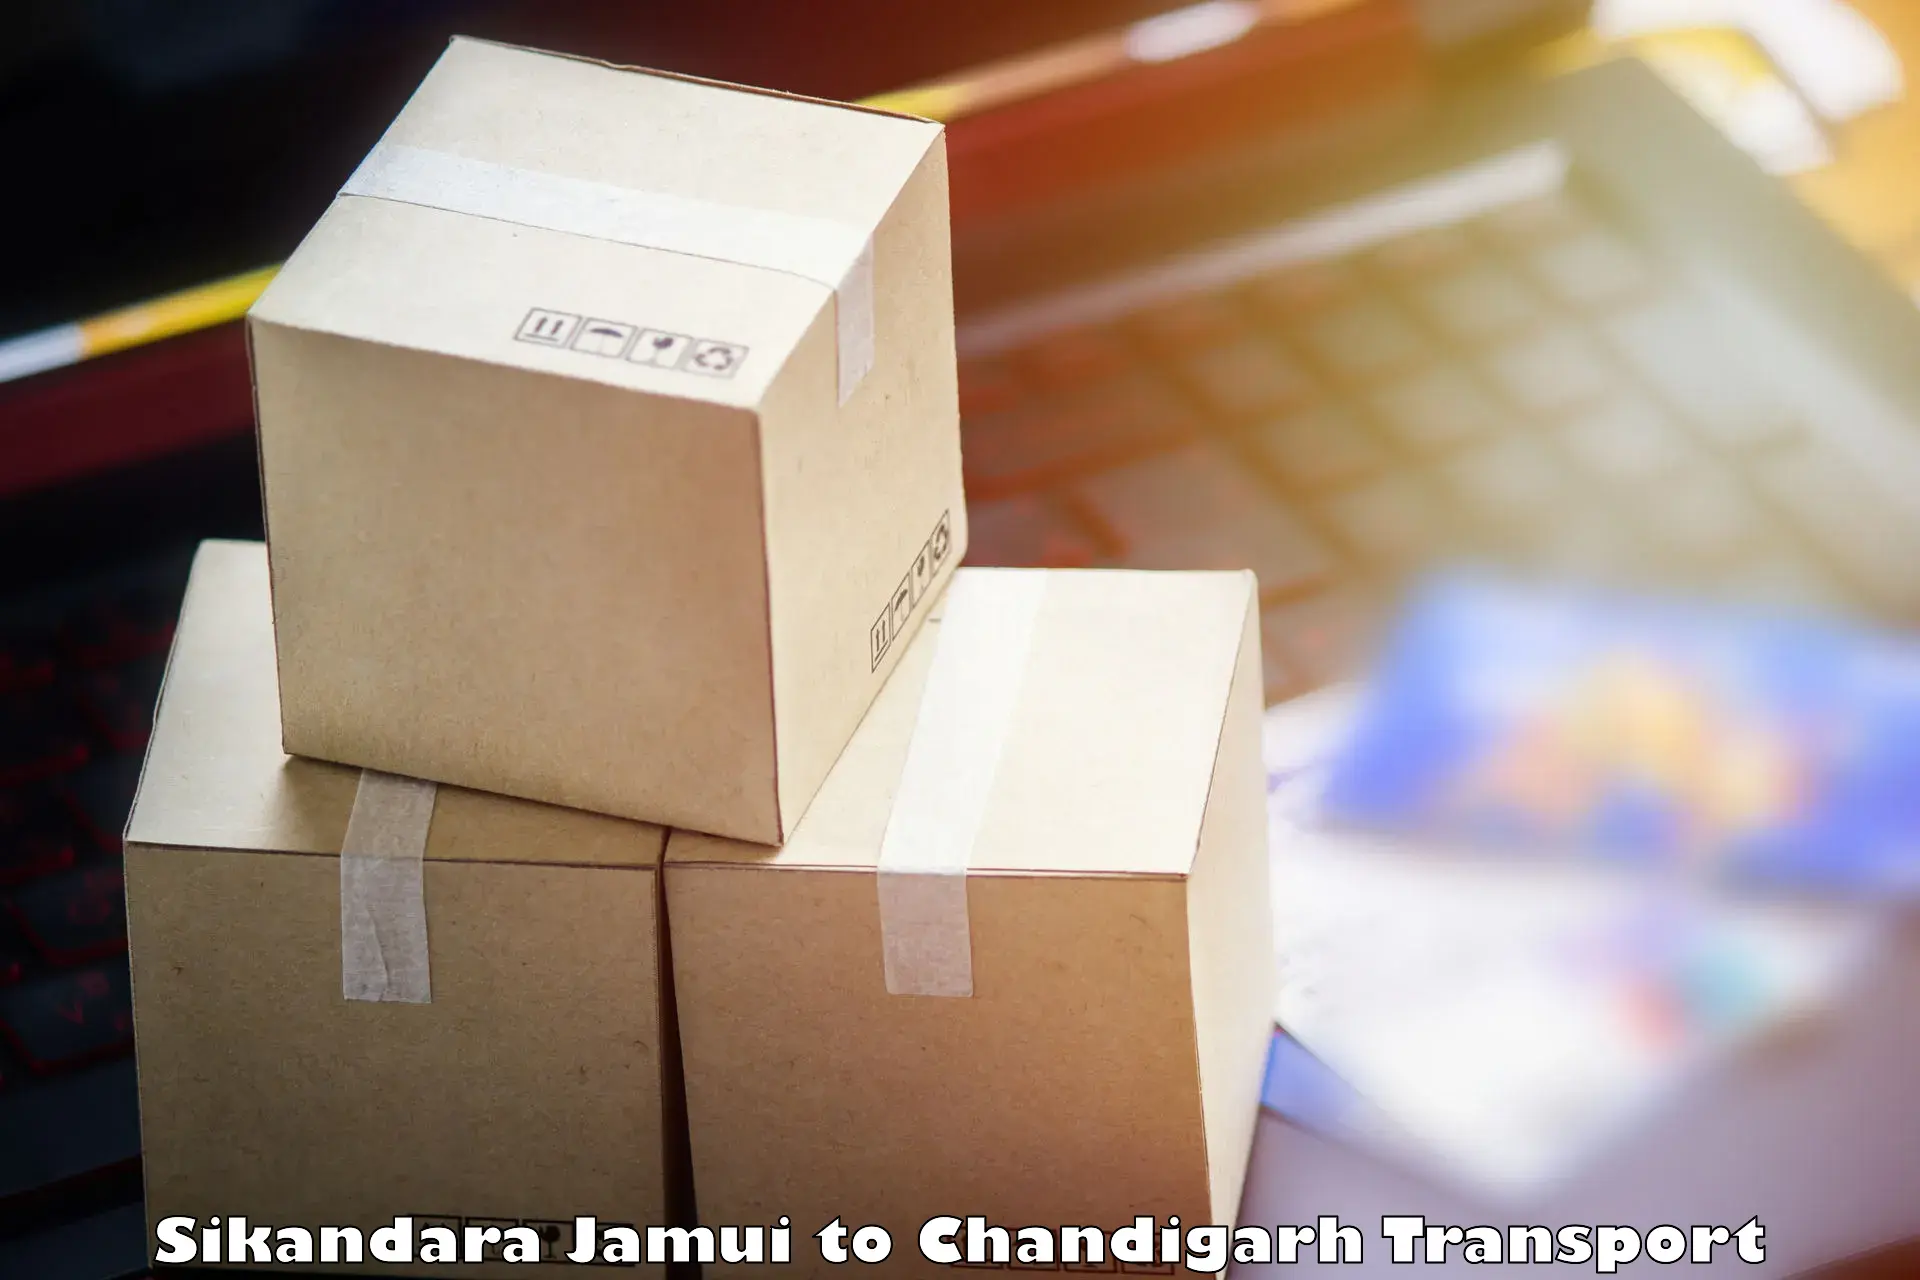 Shipping services Sikandara Jamui to Chandigarh